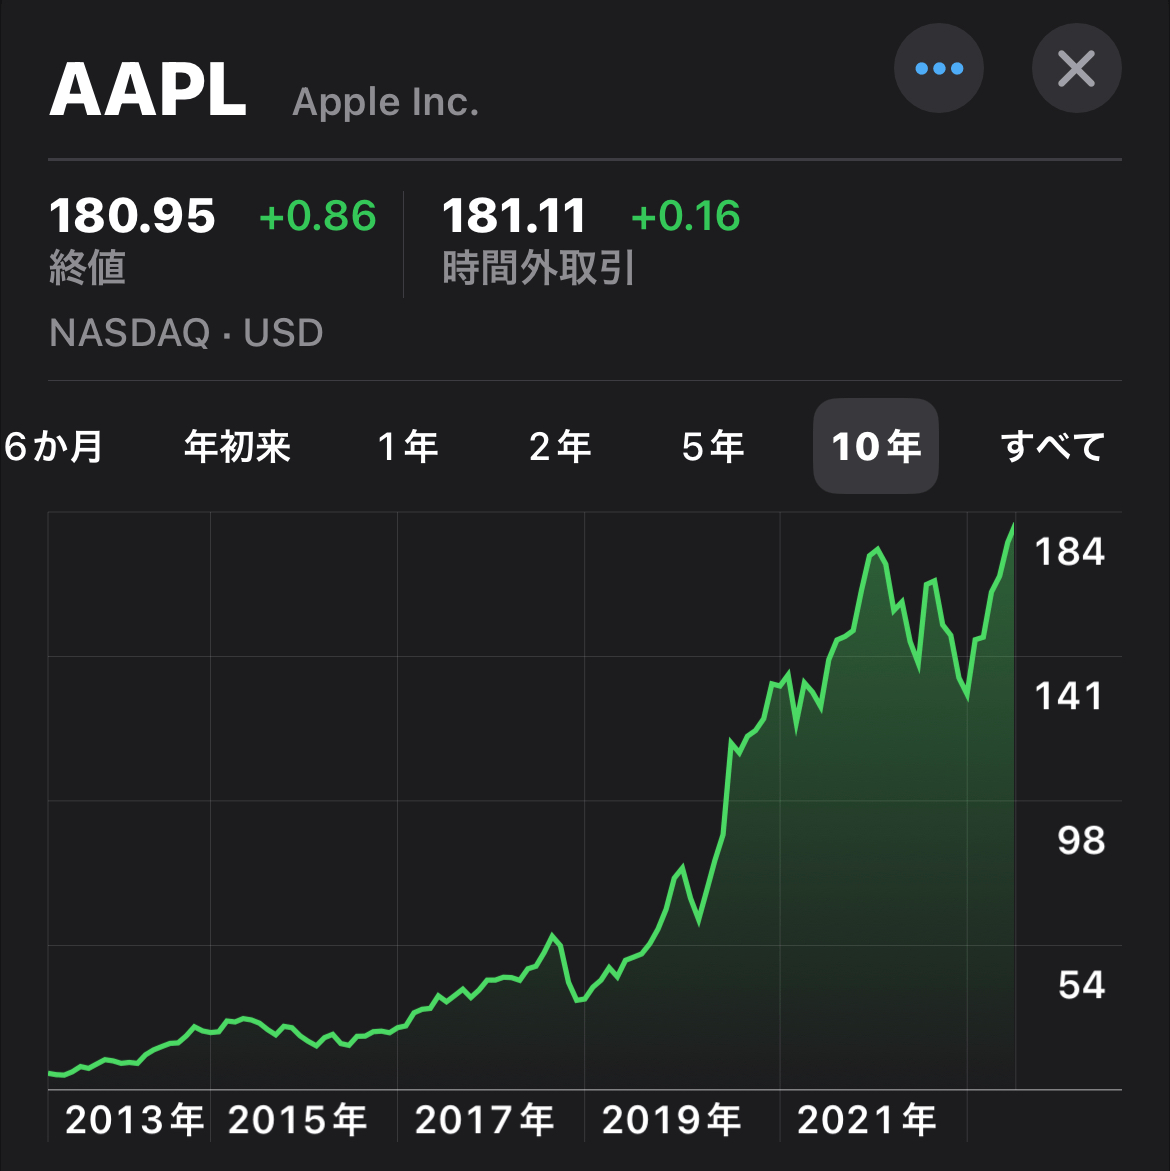 APPL stockprice